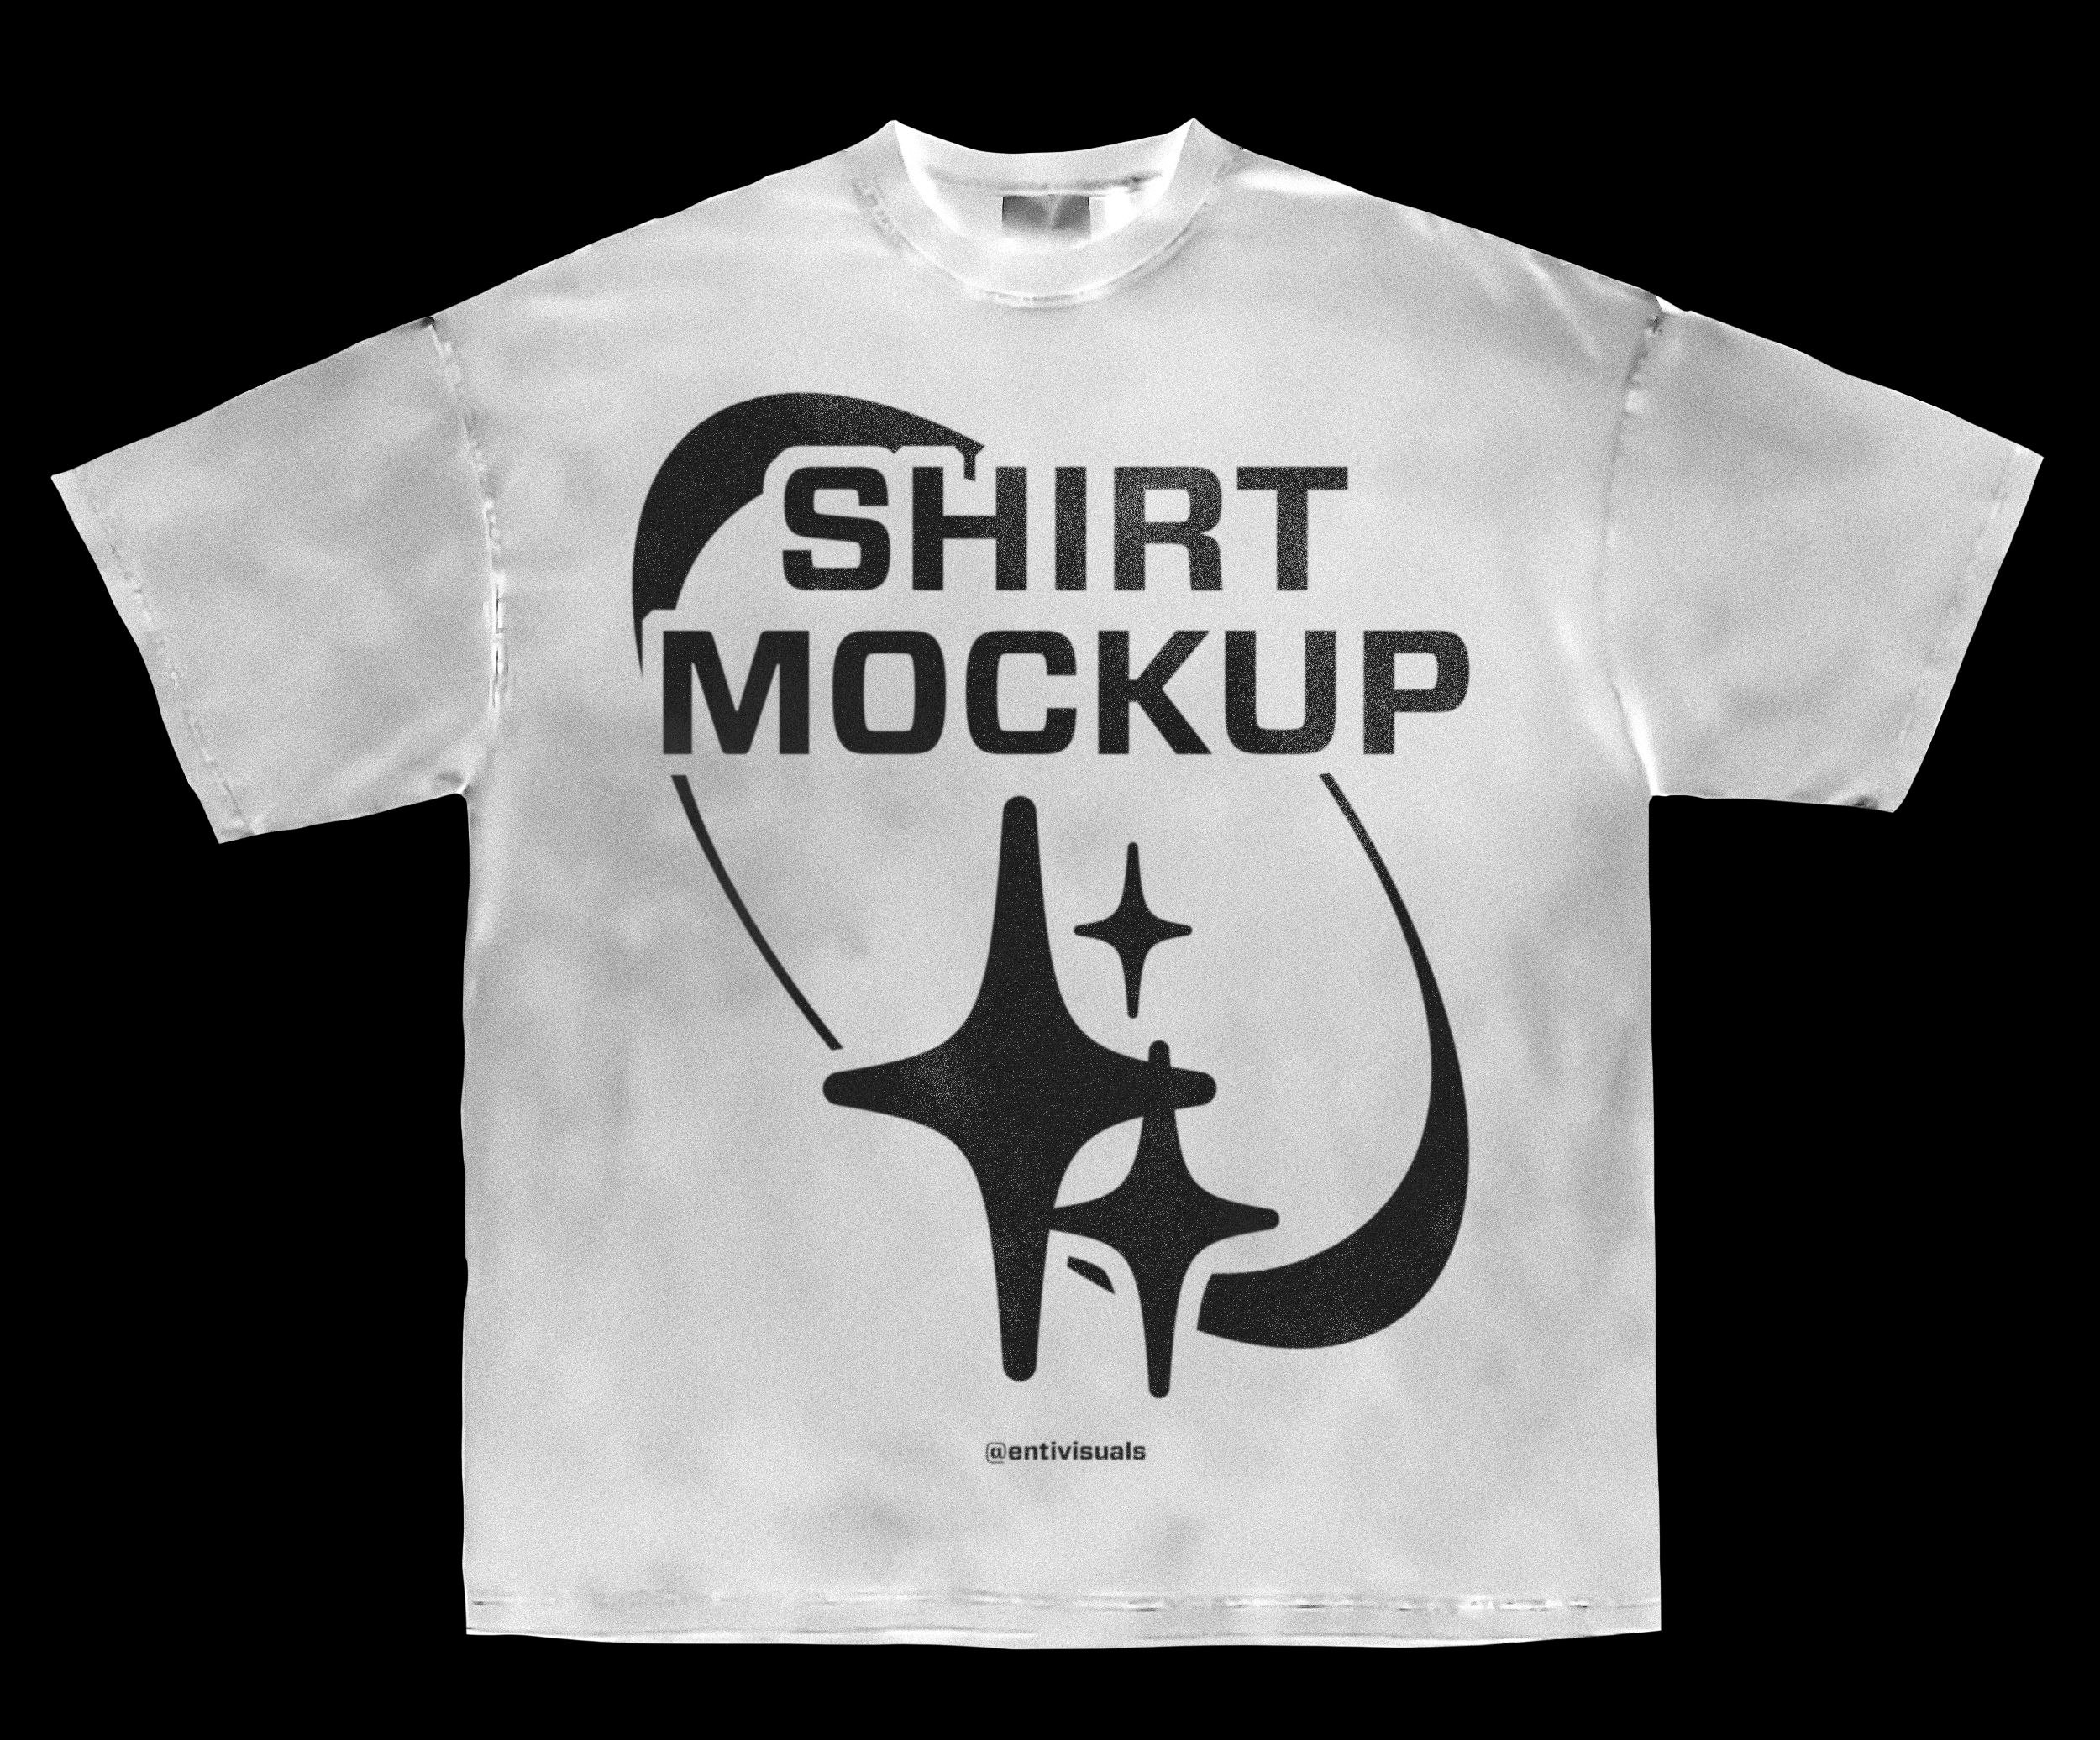 T-shirt Mockup Template PSD Free Download